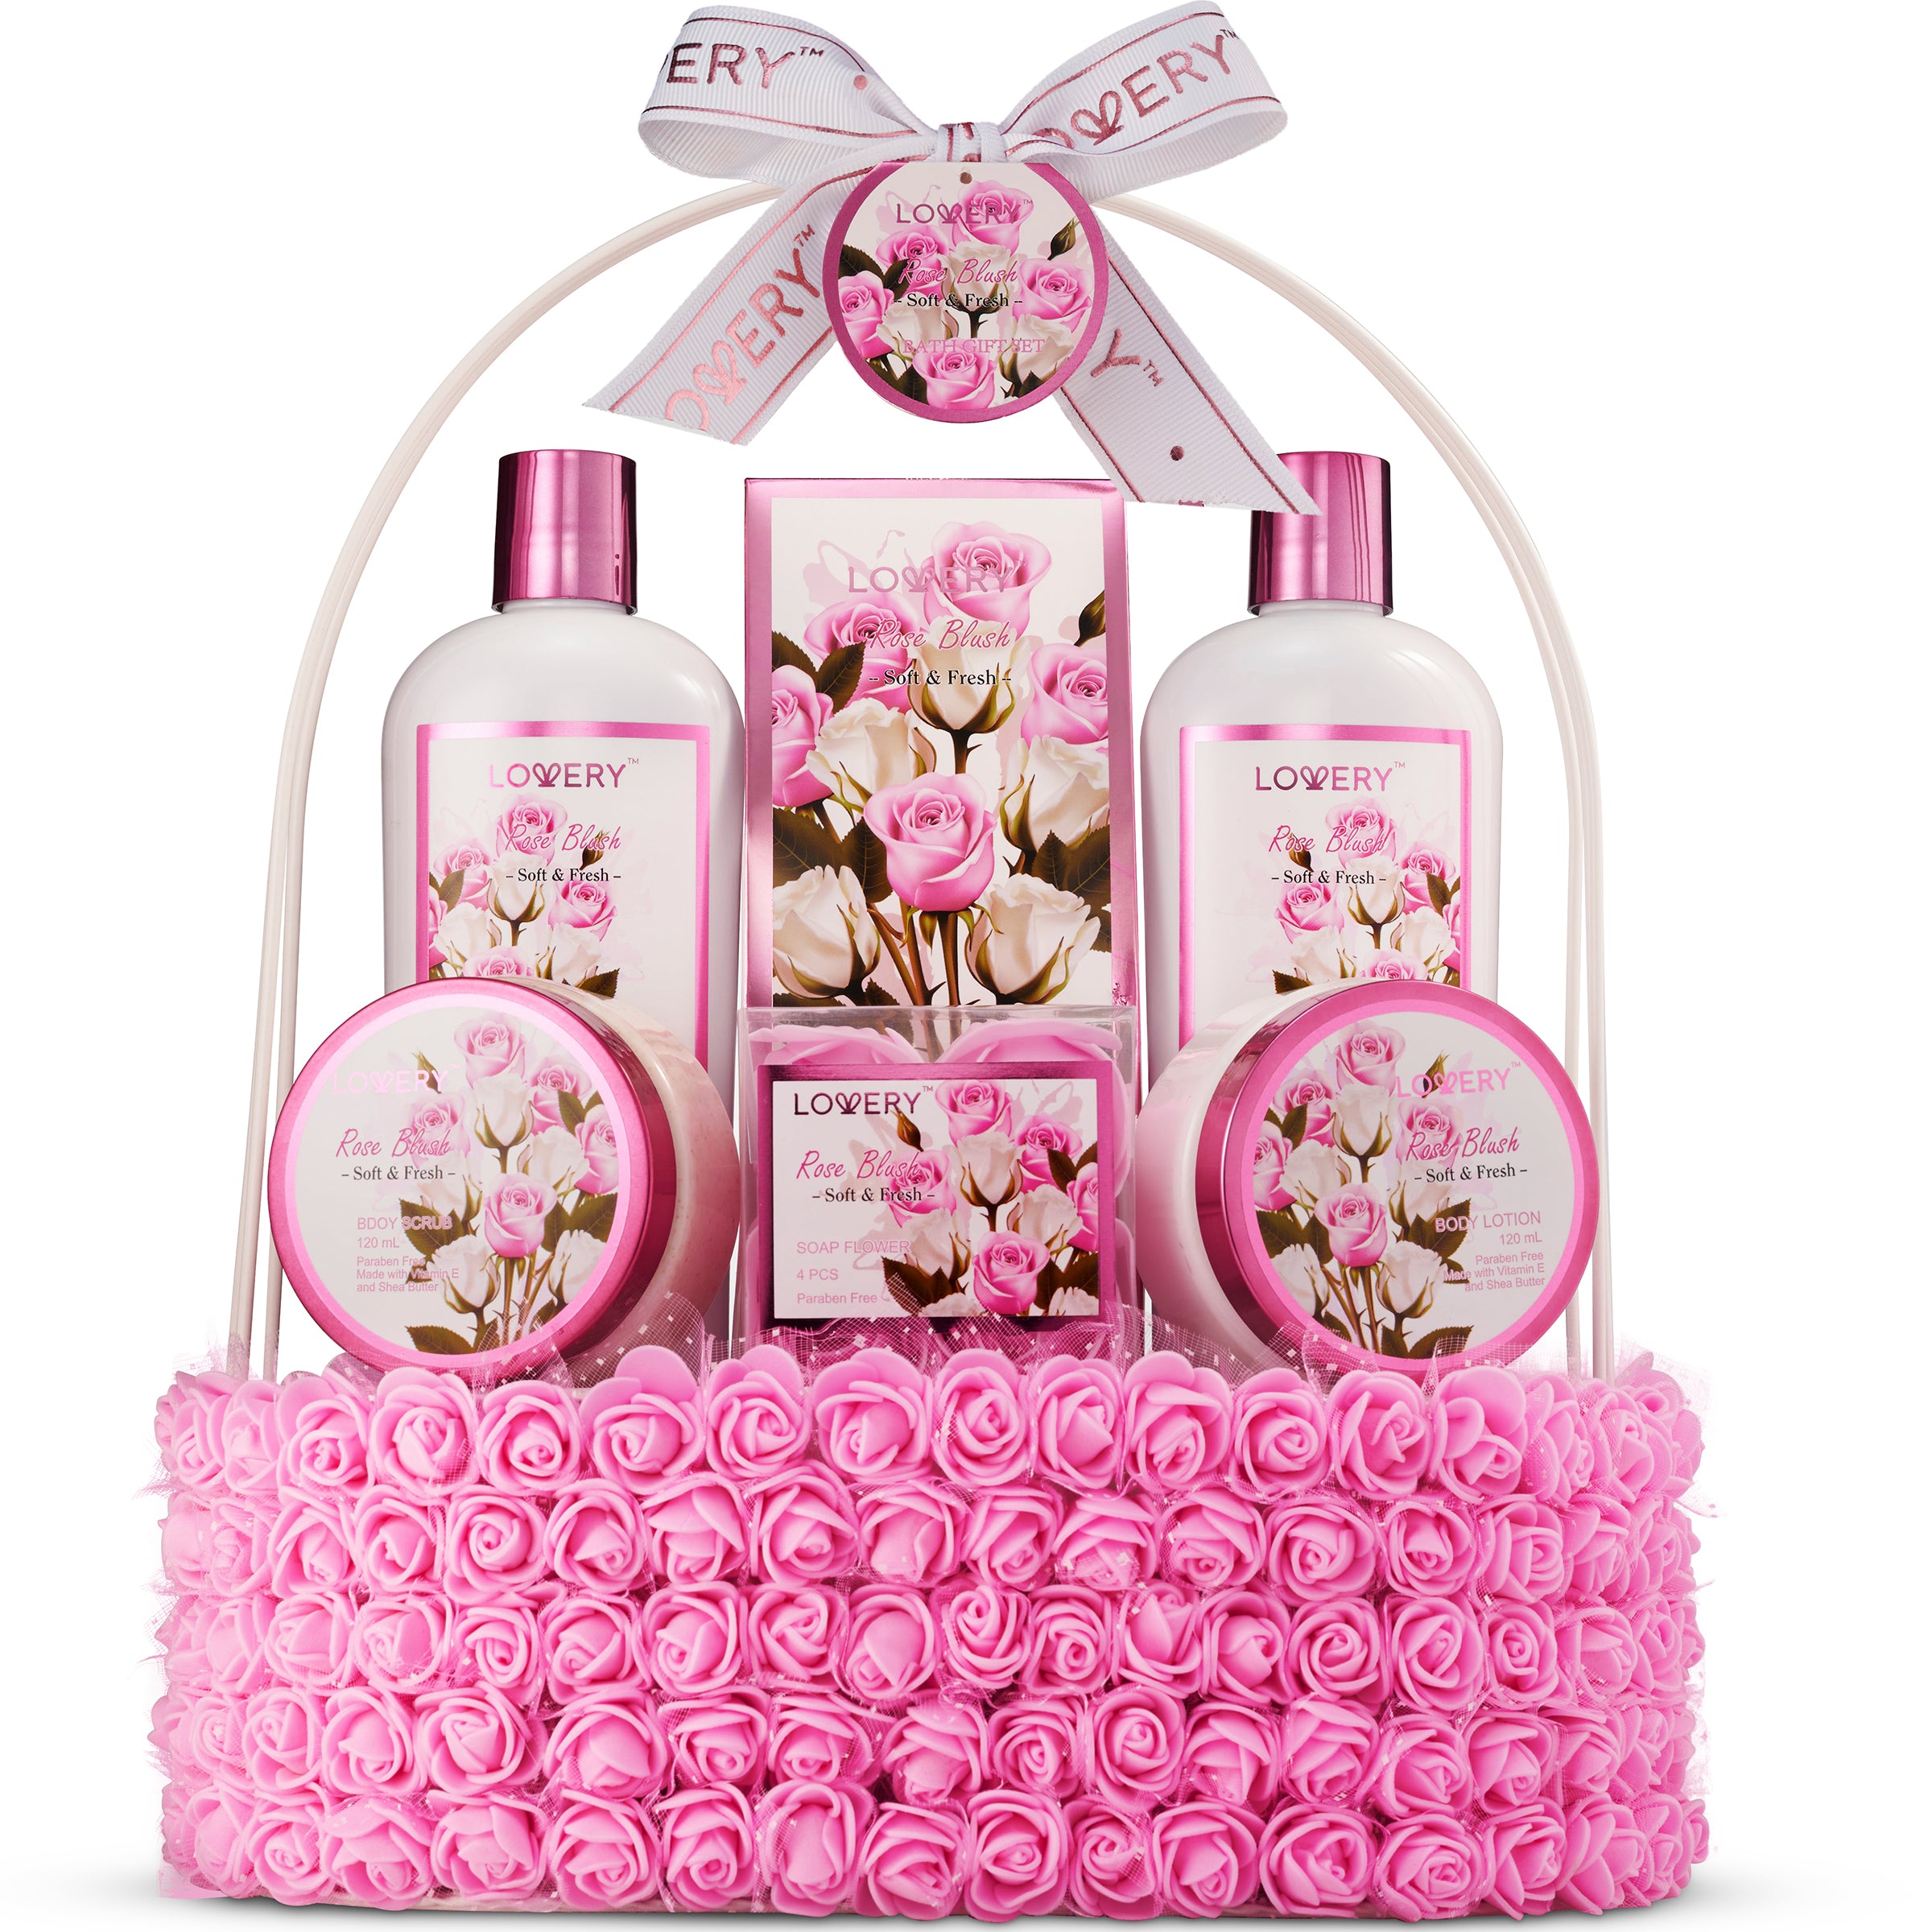 Spa Indulgences Gift Set - spa baskets for women gift, One Basket - Foods  Co.